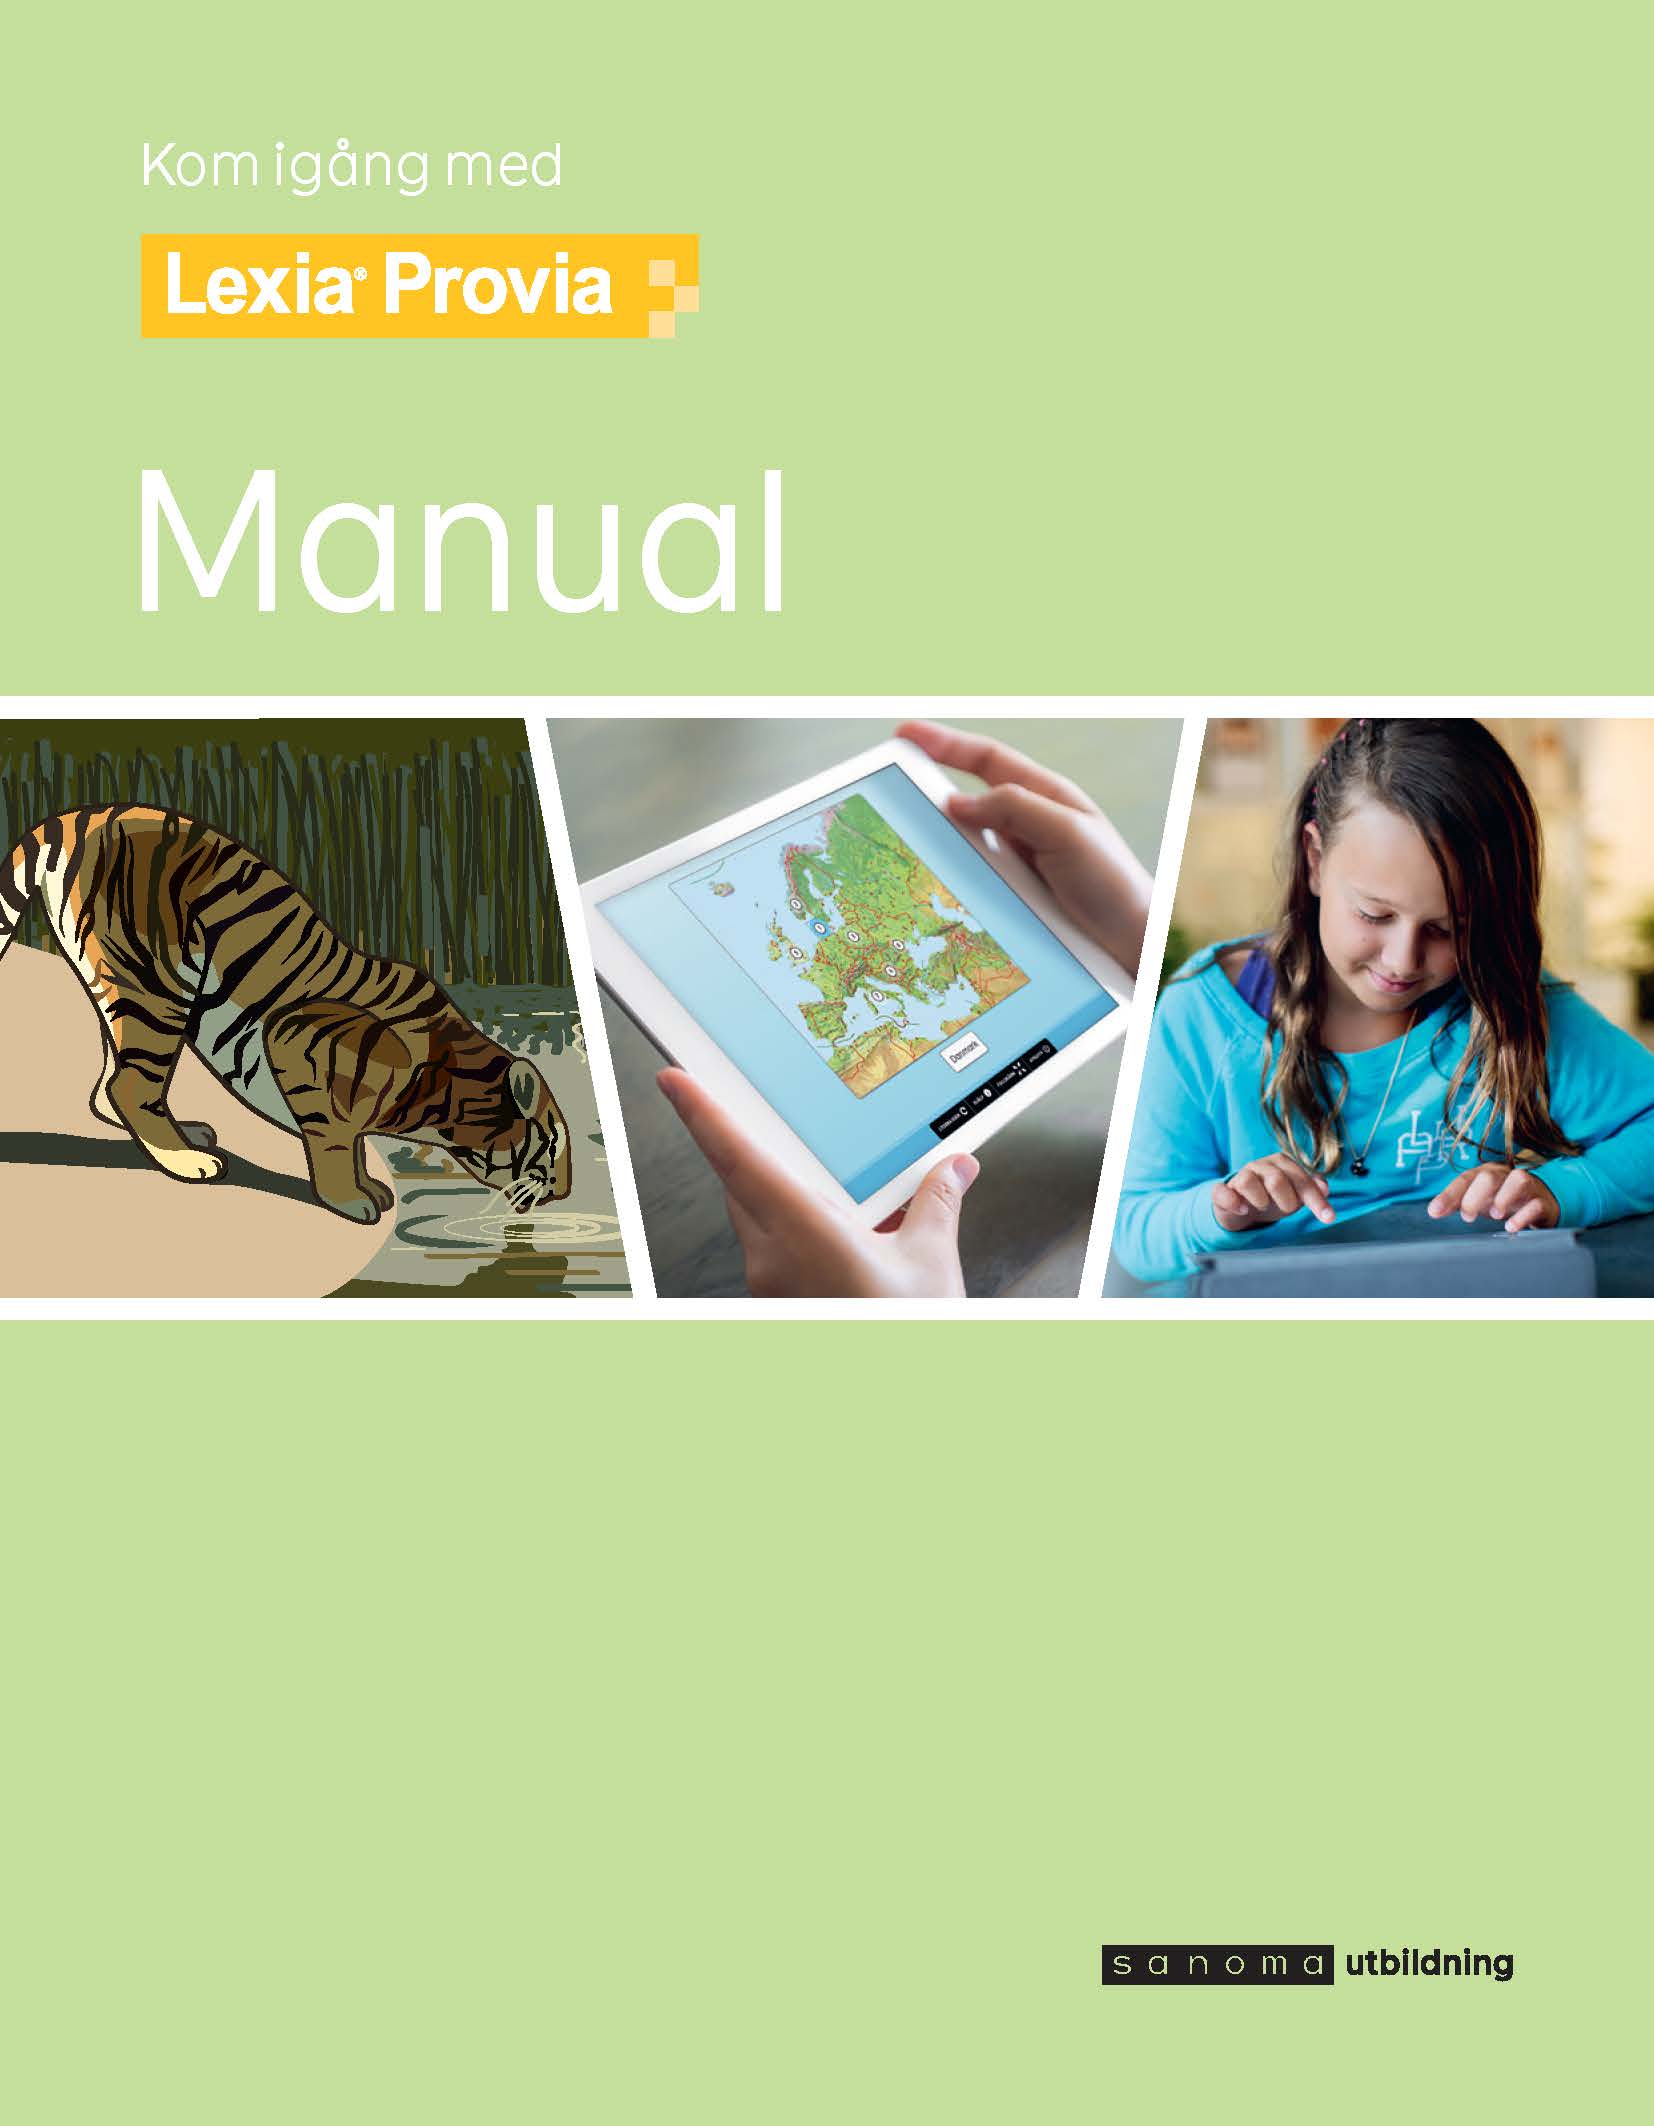 Omslag_manual_Lexia.jpg